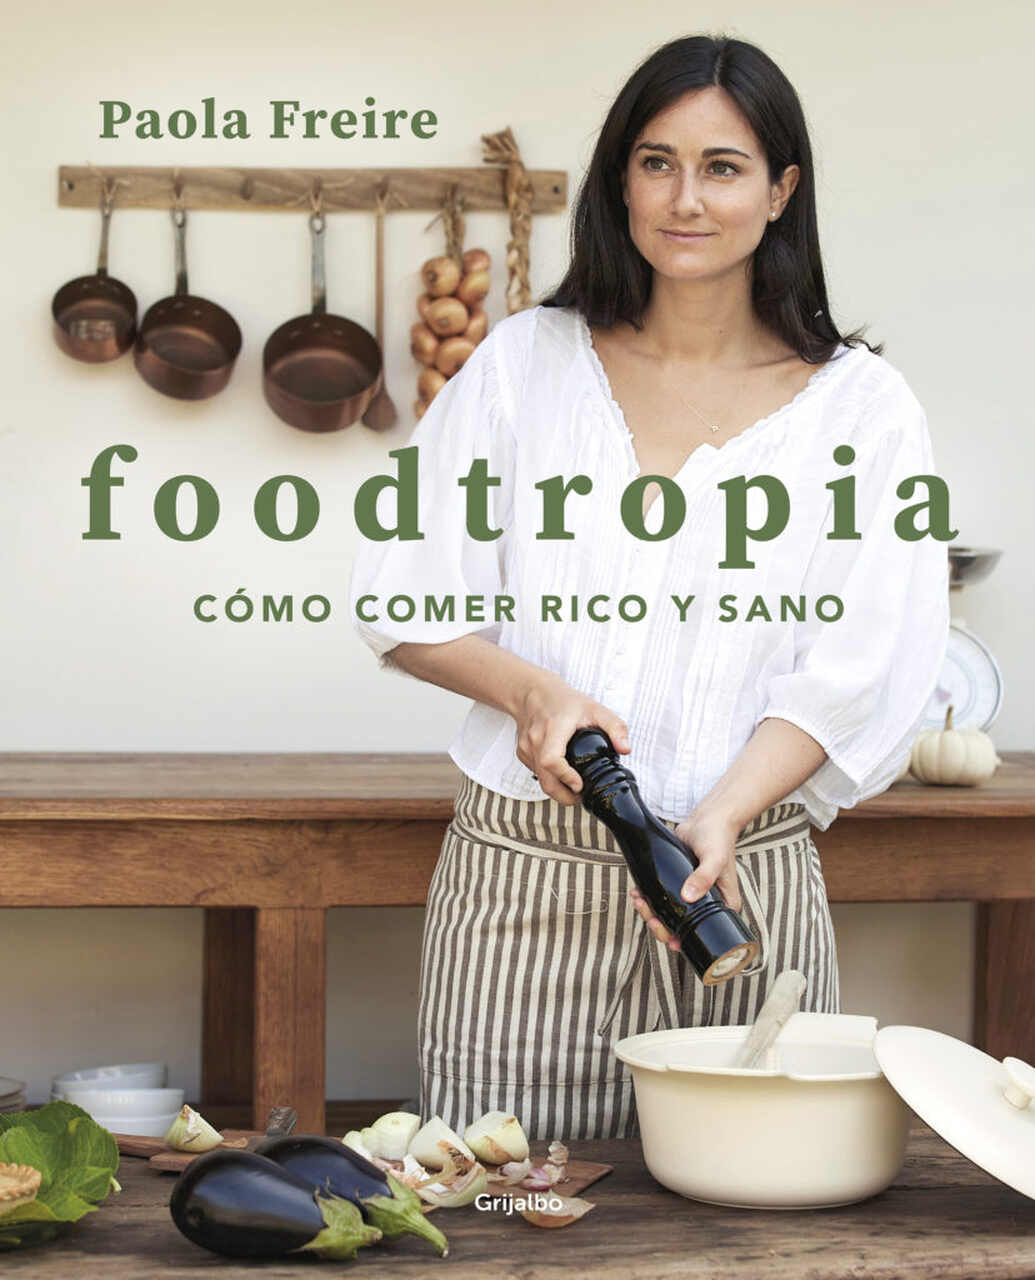 Paola Freire, gastronomía, foodtropia